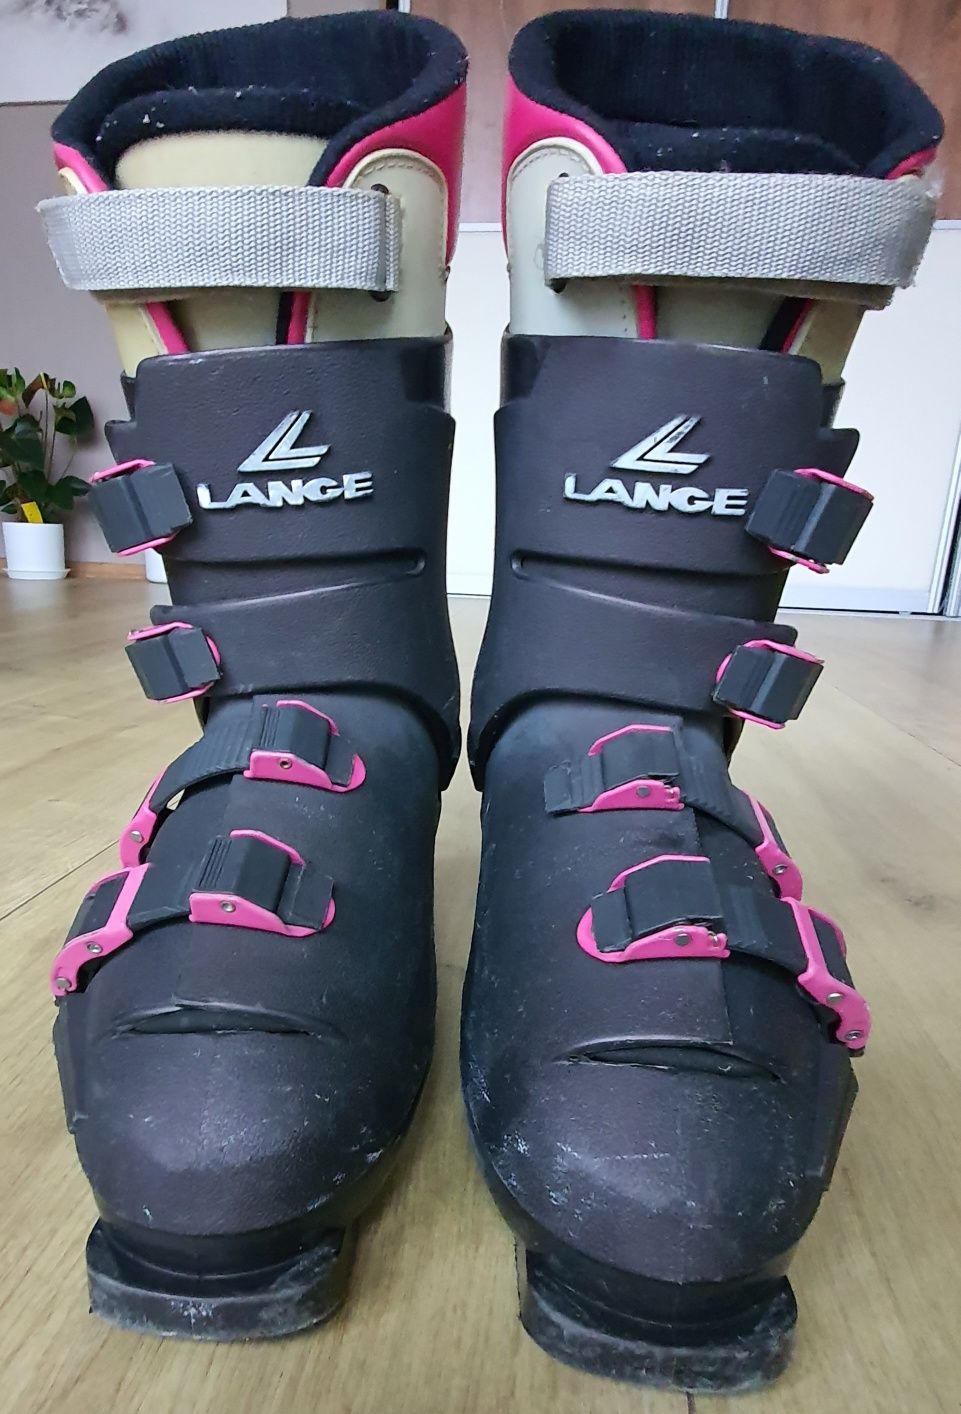 Buty narciarskie Lange 28-28.5 cm damskie